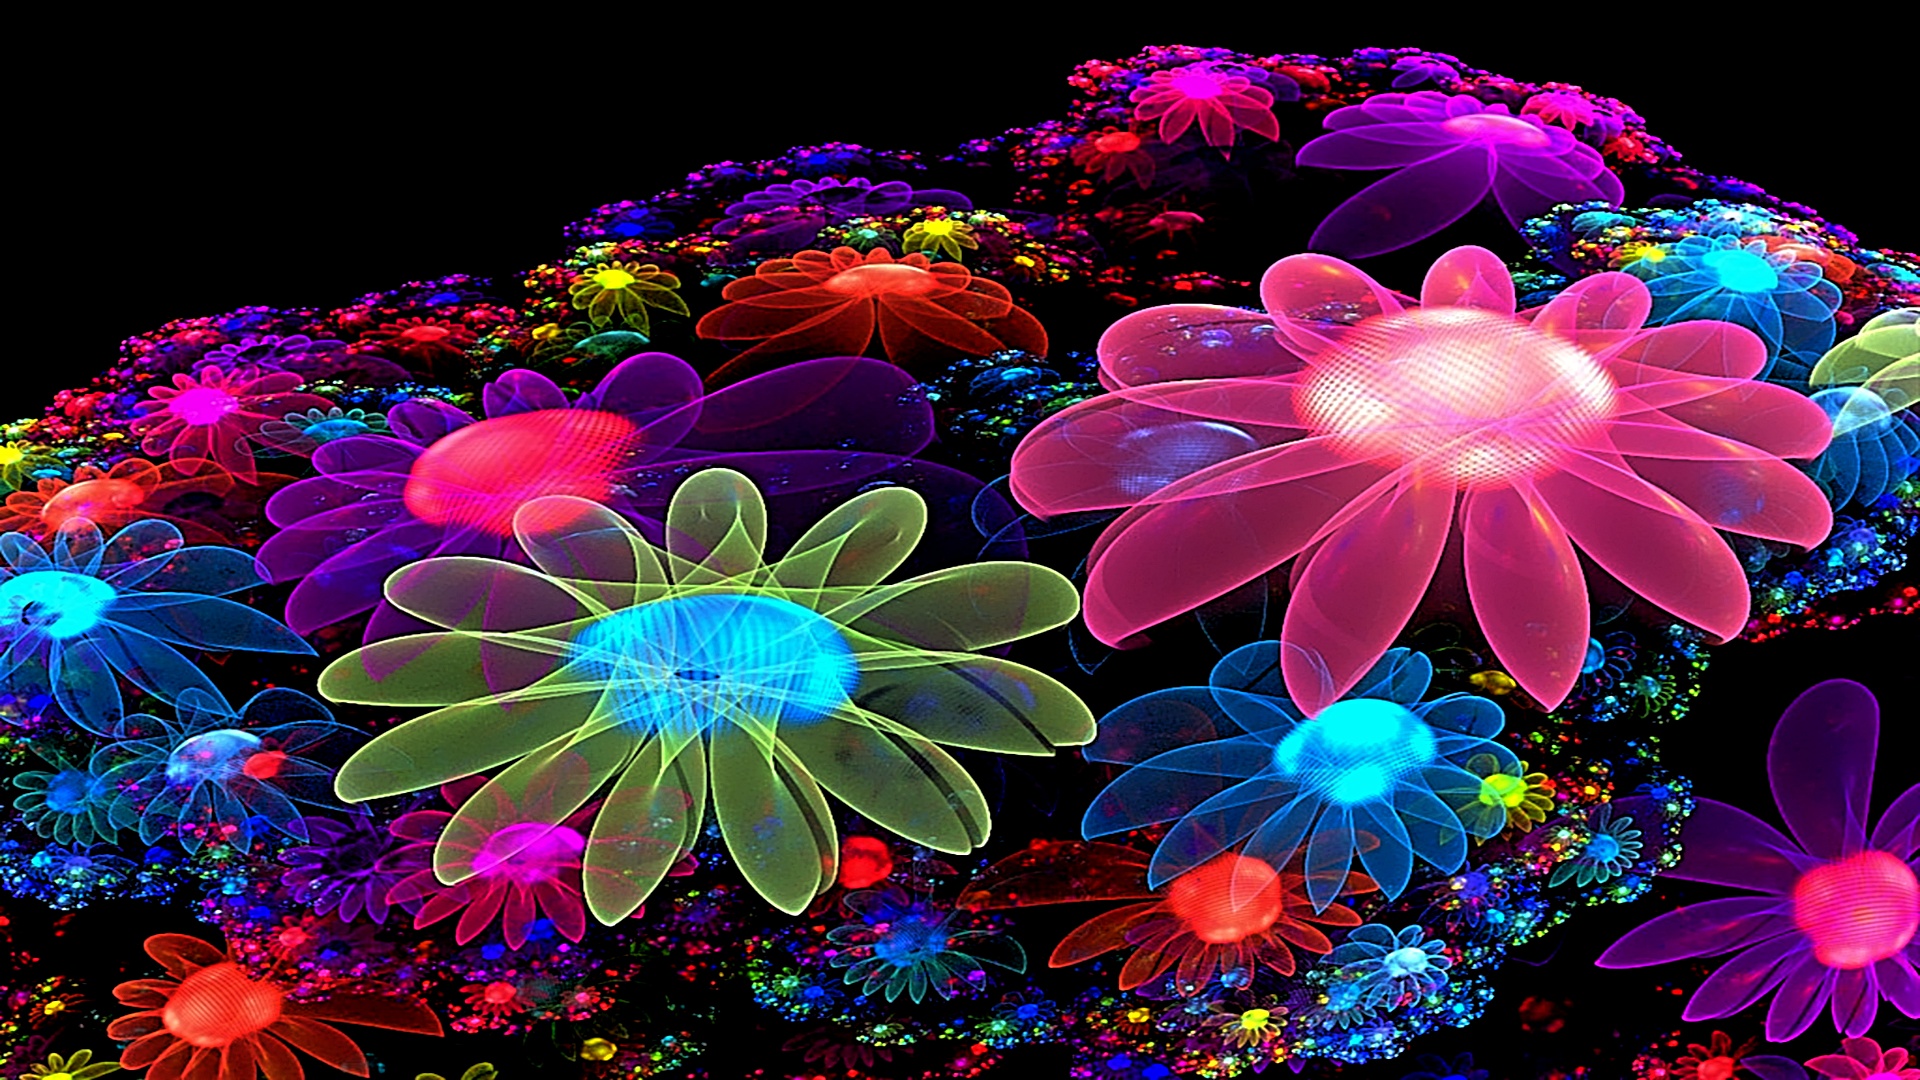 Cool Colorful Flowers Desktop Wallpaper Image